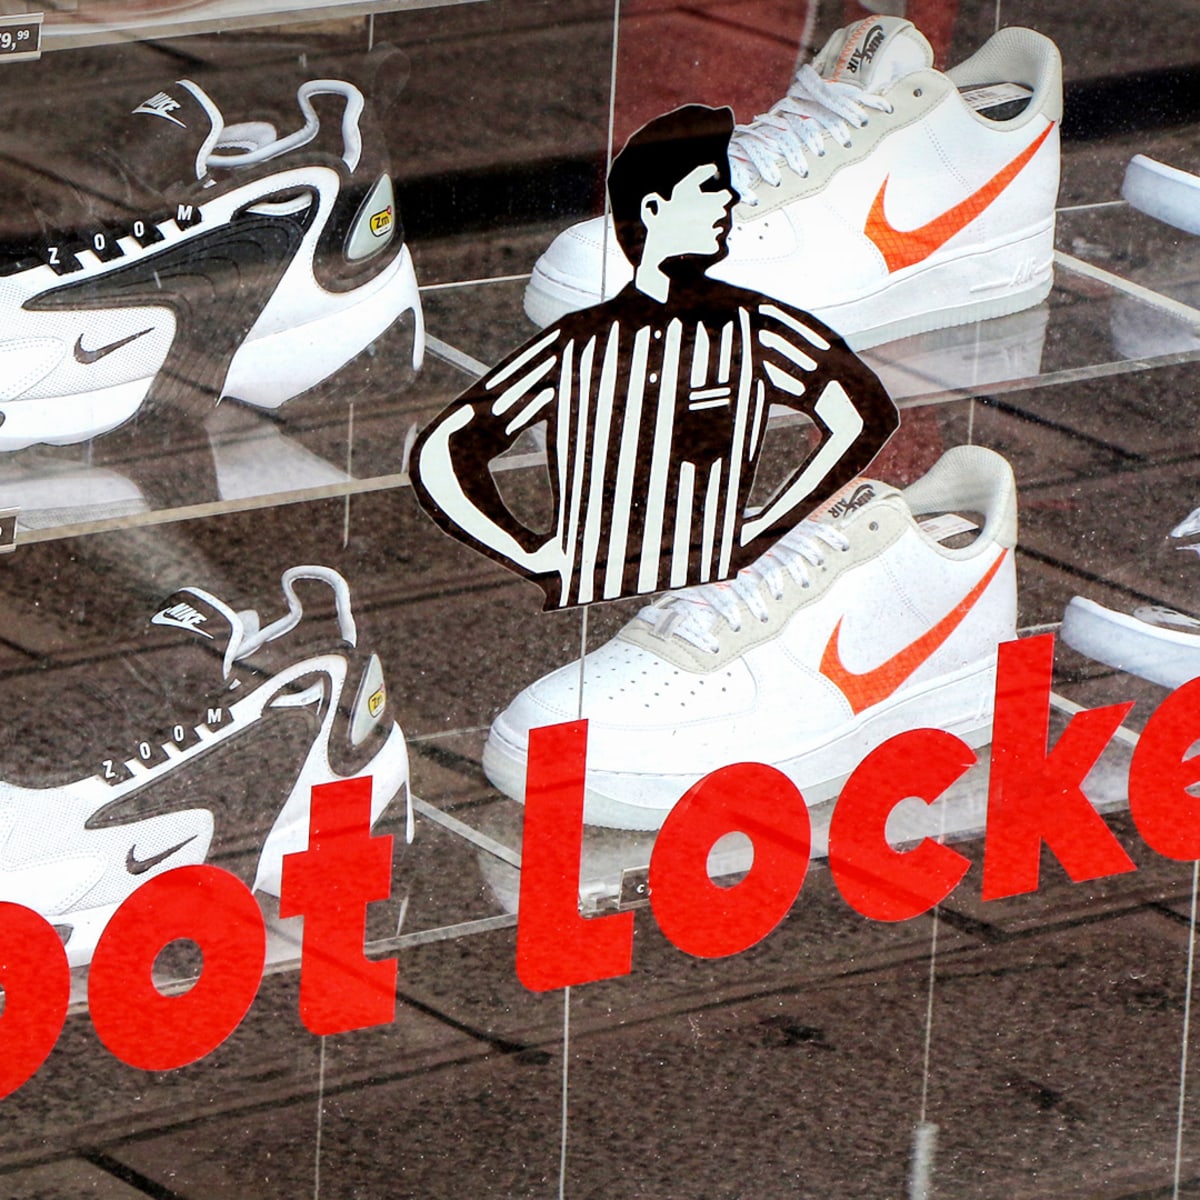 Foot Locker Must Fix a Huge Hole Before  Sinks the Retailer